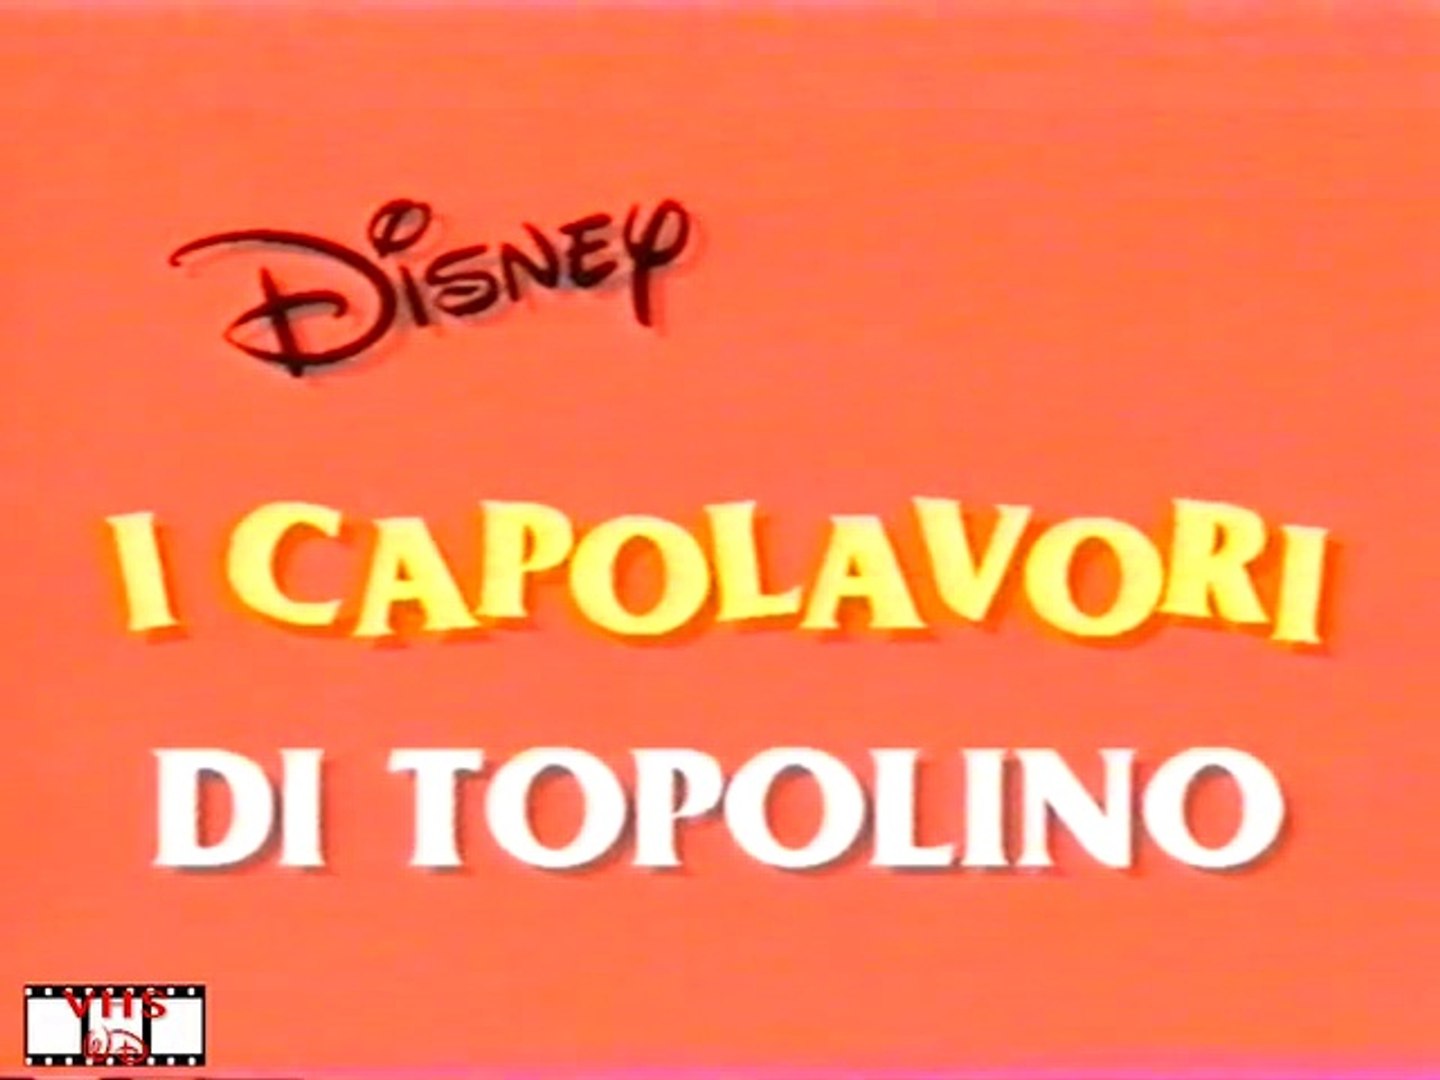 VHSWD PausaVideo - Sigla "I capolavori di Topolino" - Video Dailymotion